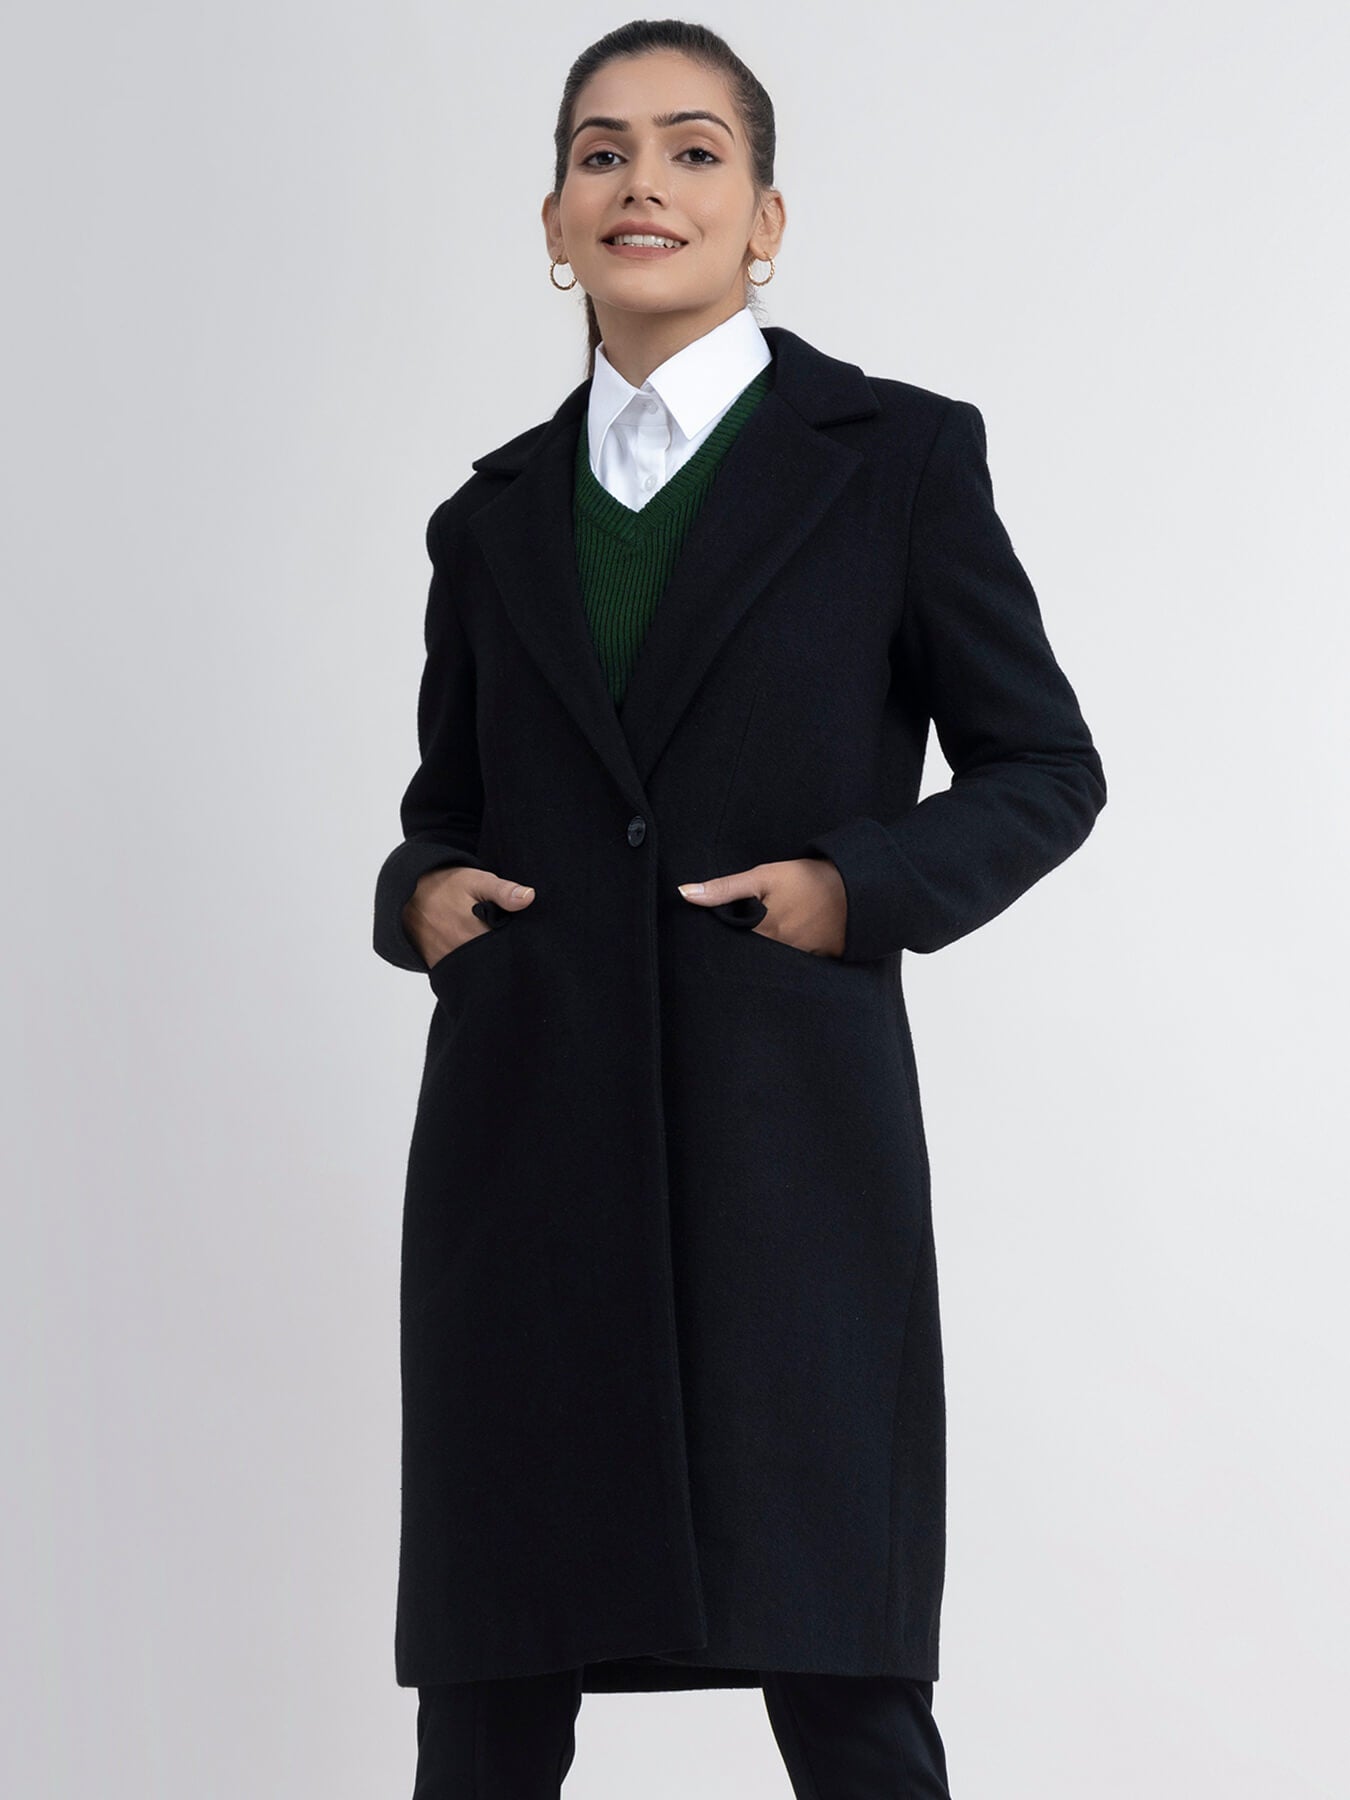 Wool Blend Long Overcoat - Black